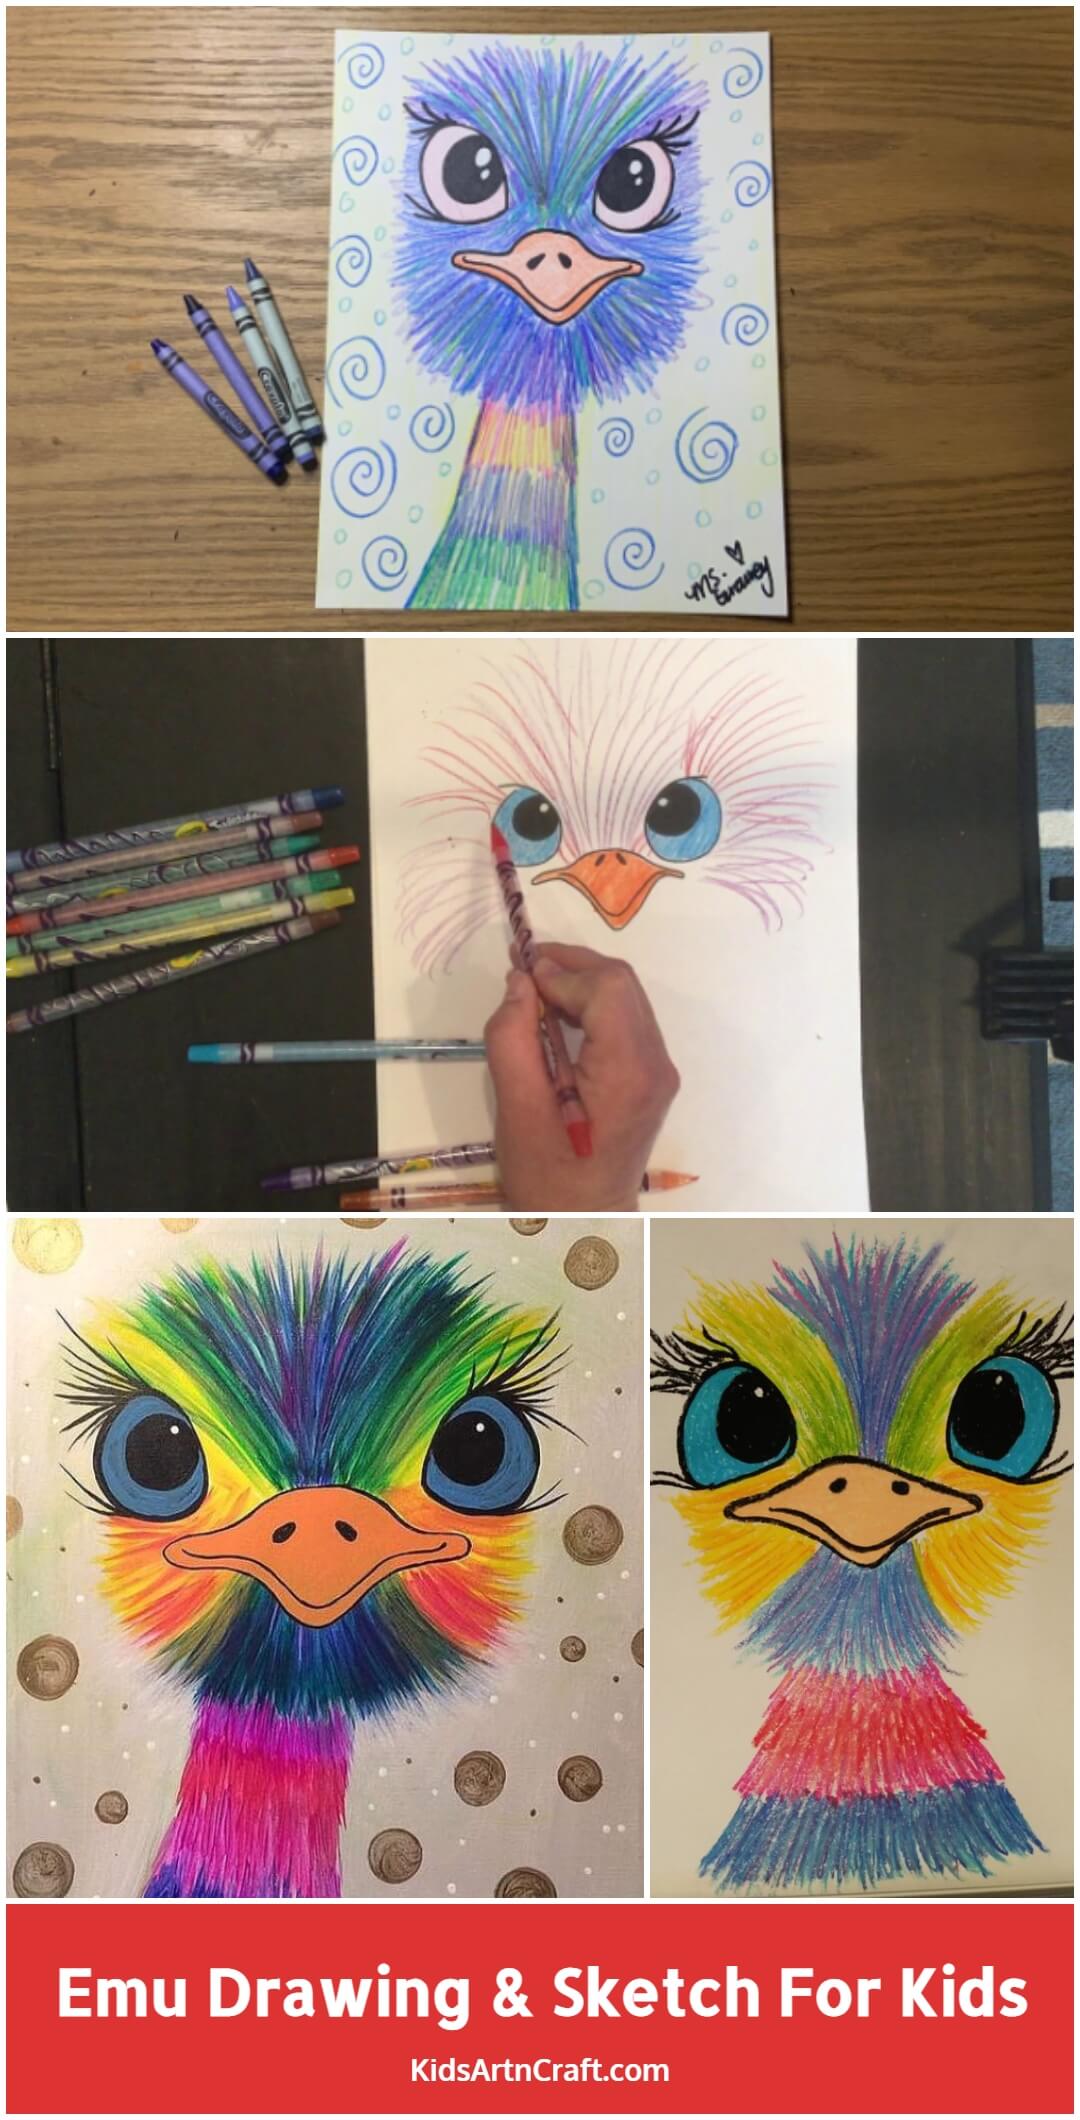 Emu Drawing & Sketch For Kids